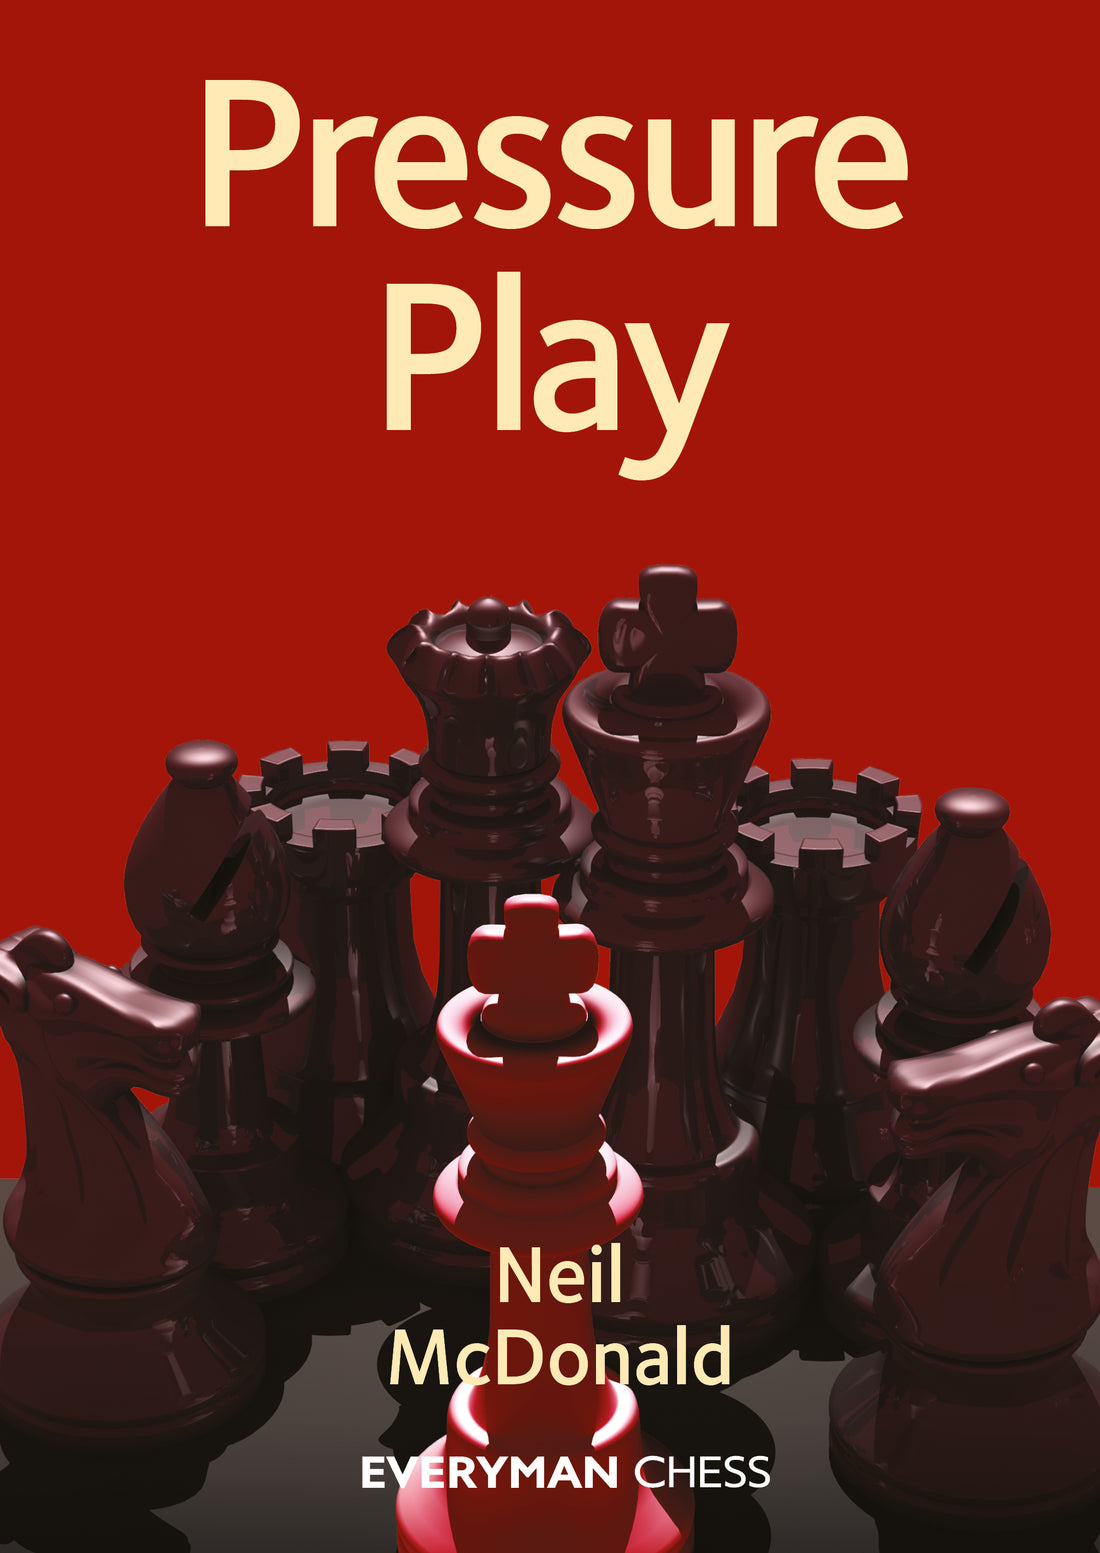 Positional Play Bundle - Killer Chess Training